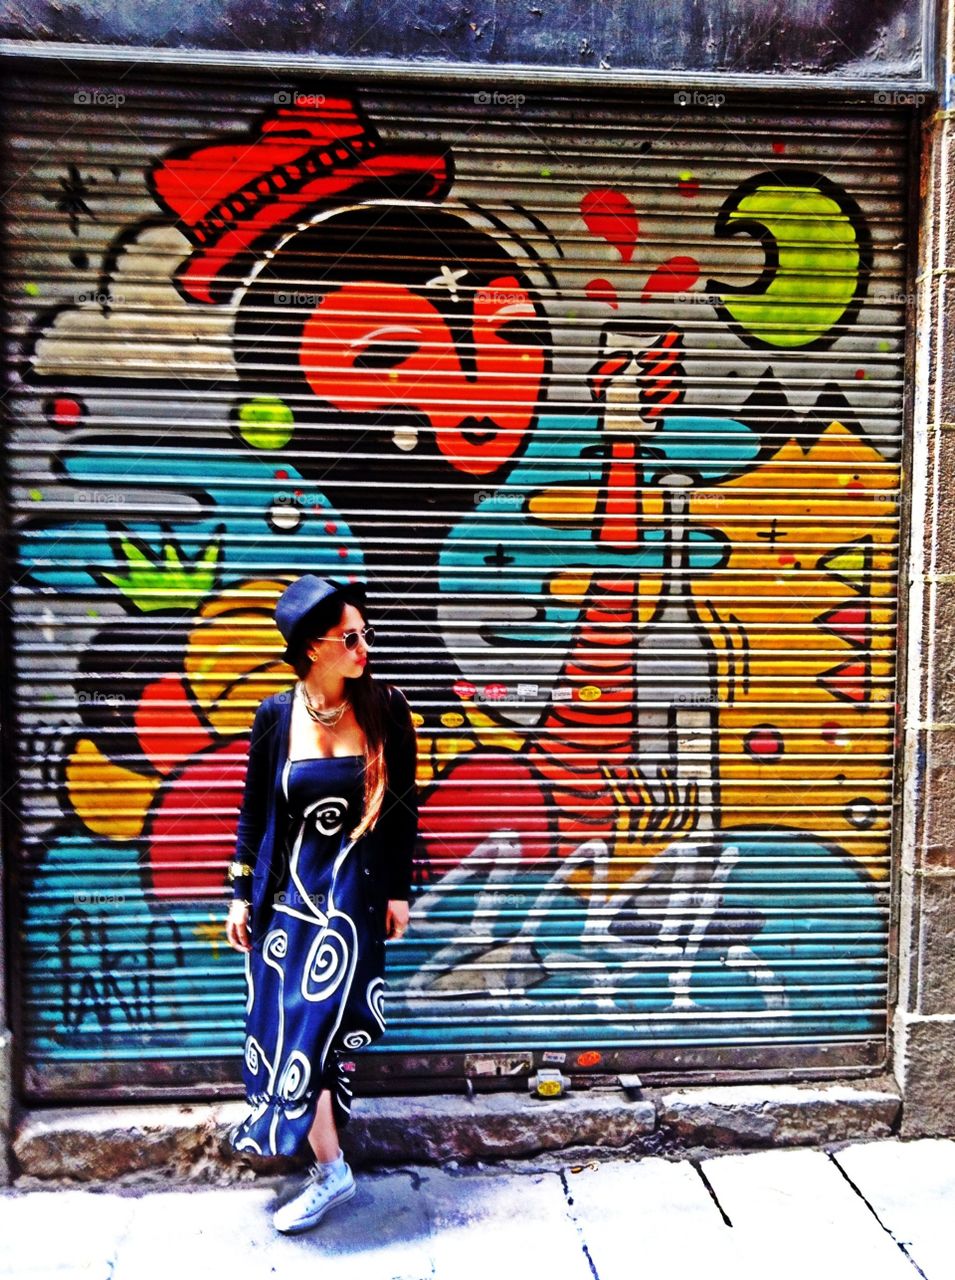 Graffiti and a girl. Graffiti in Barcelona 